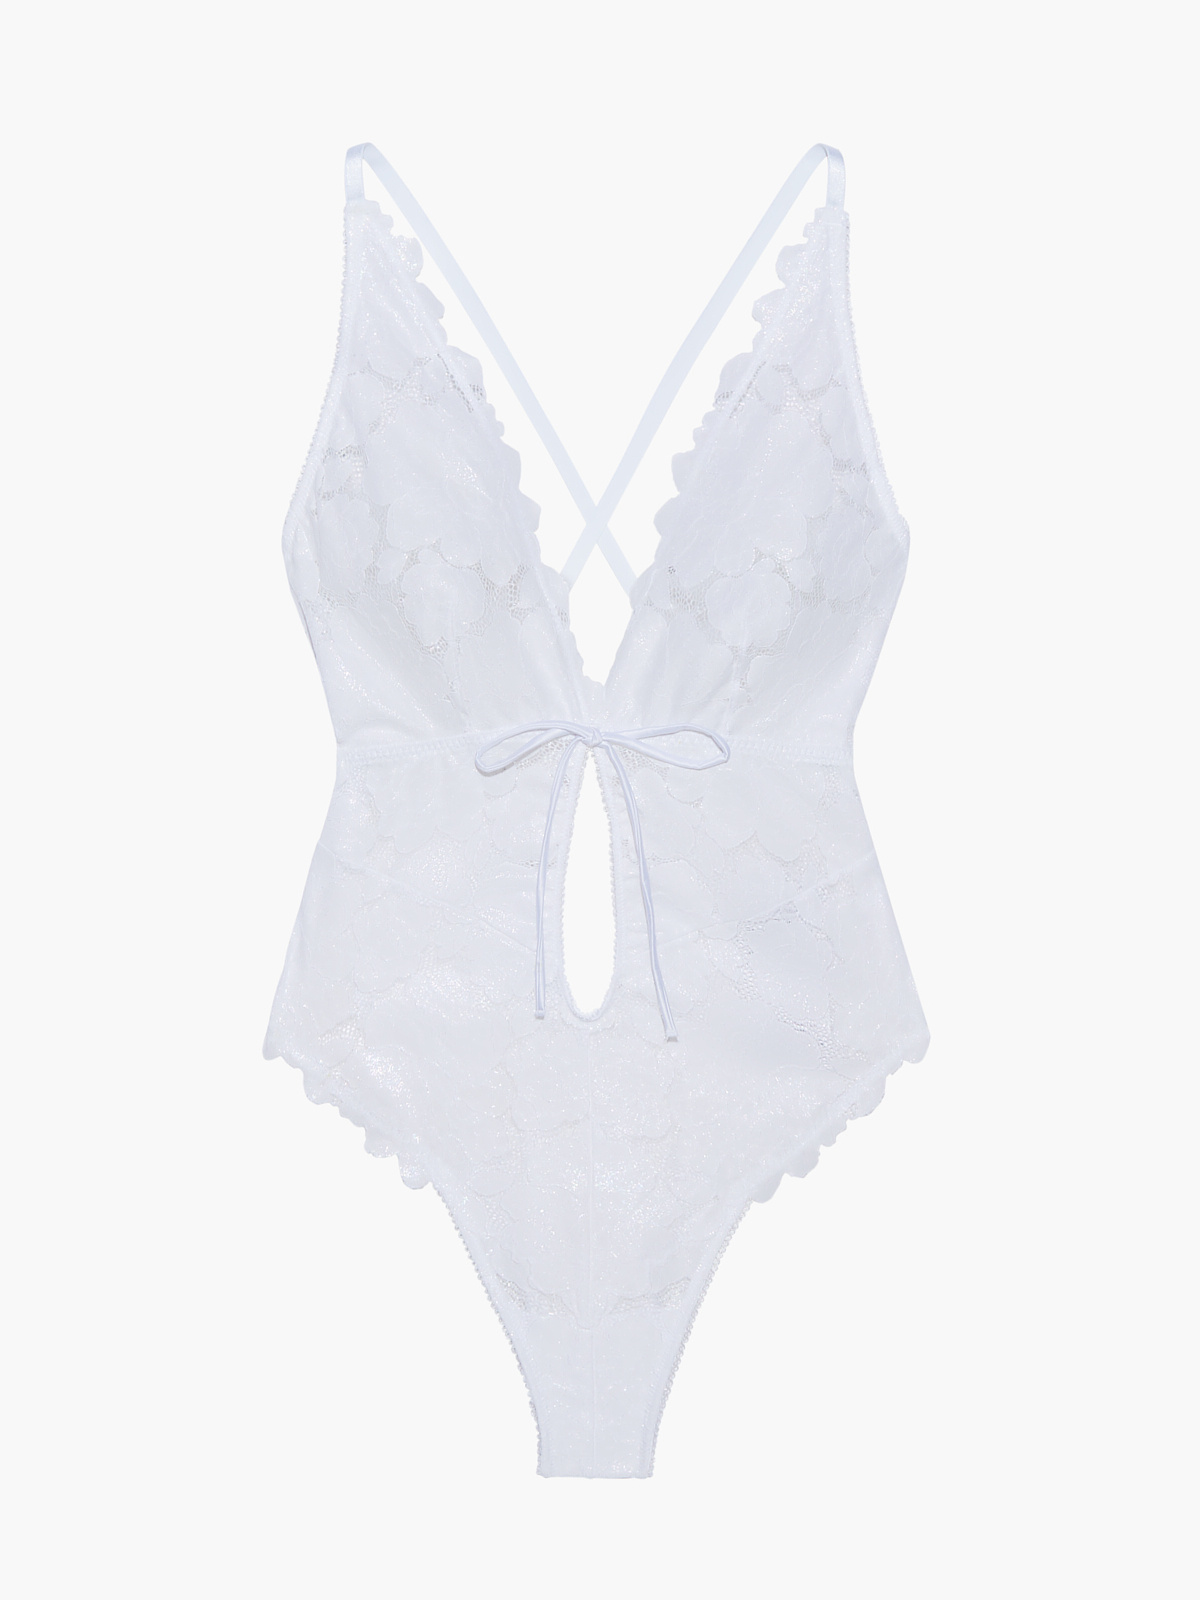 Louis Vuitton White Openwork Lace Knit Bodysuit 1A8346 - Privae